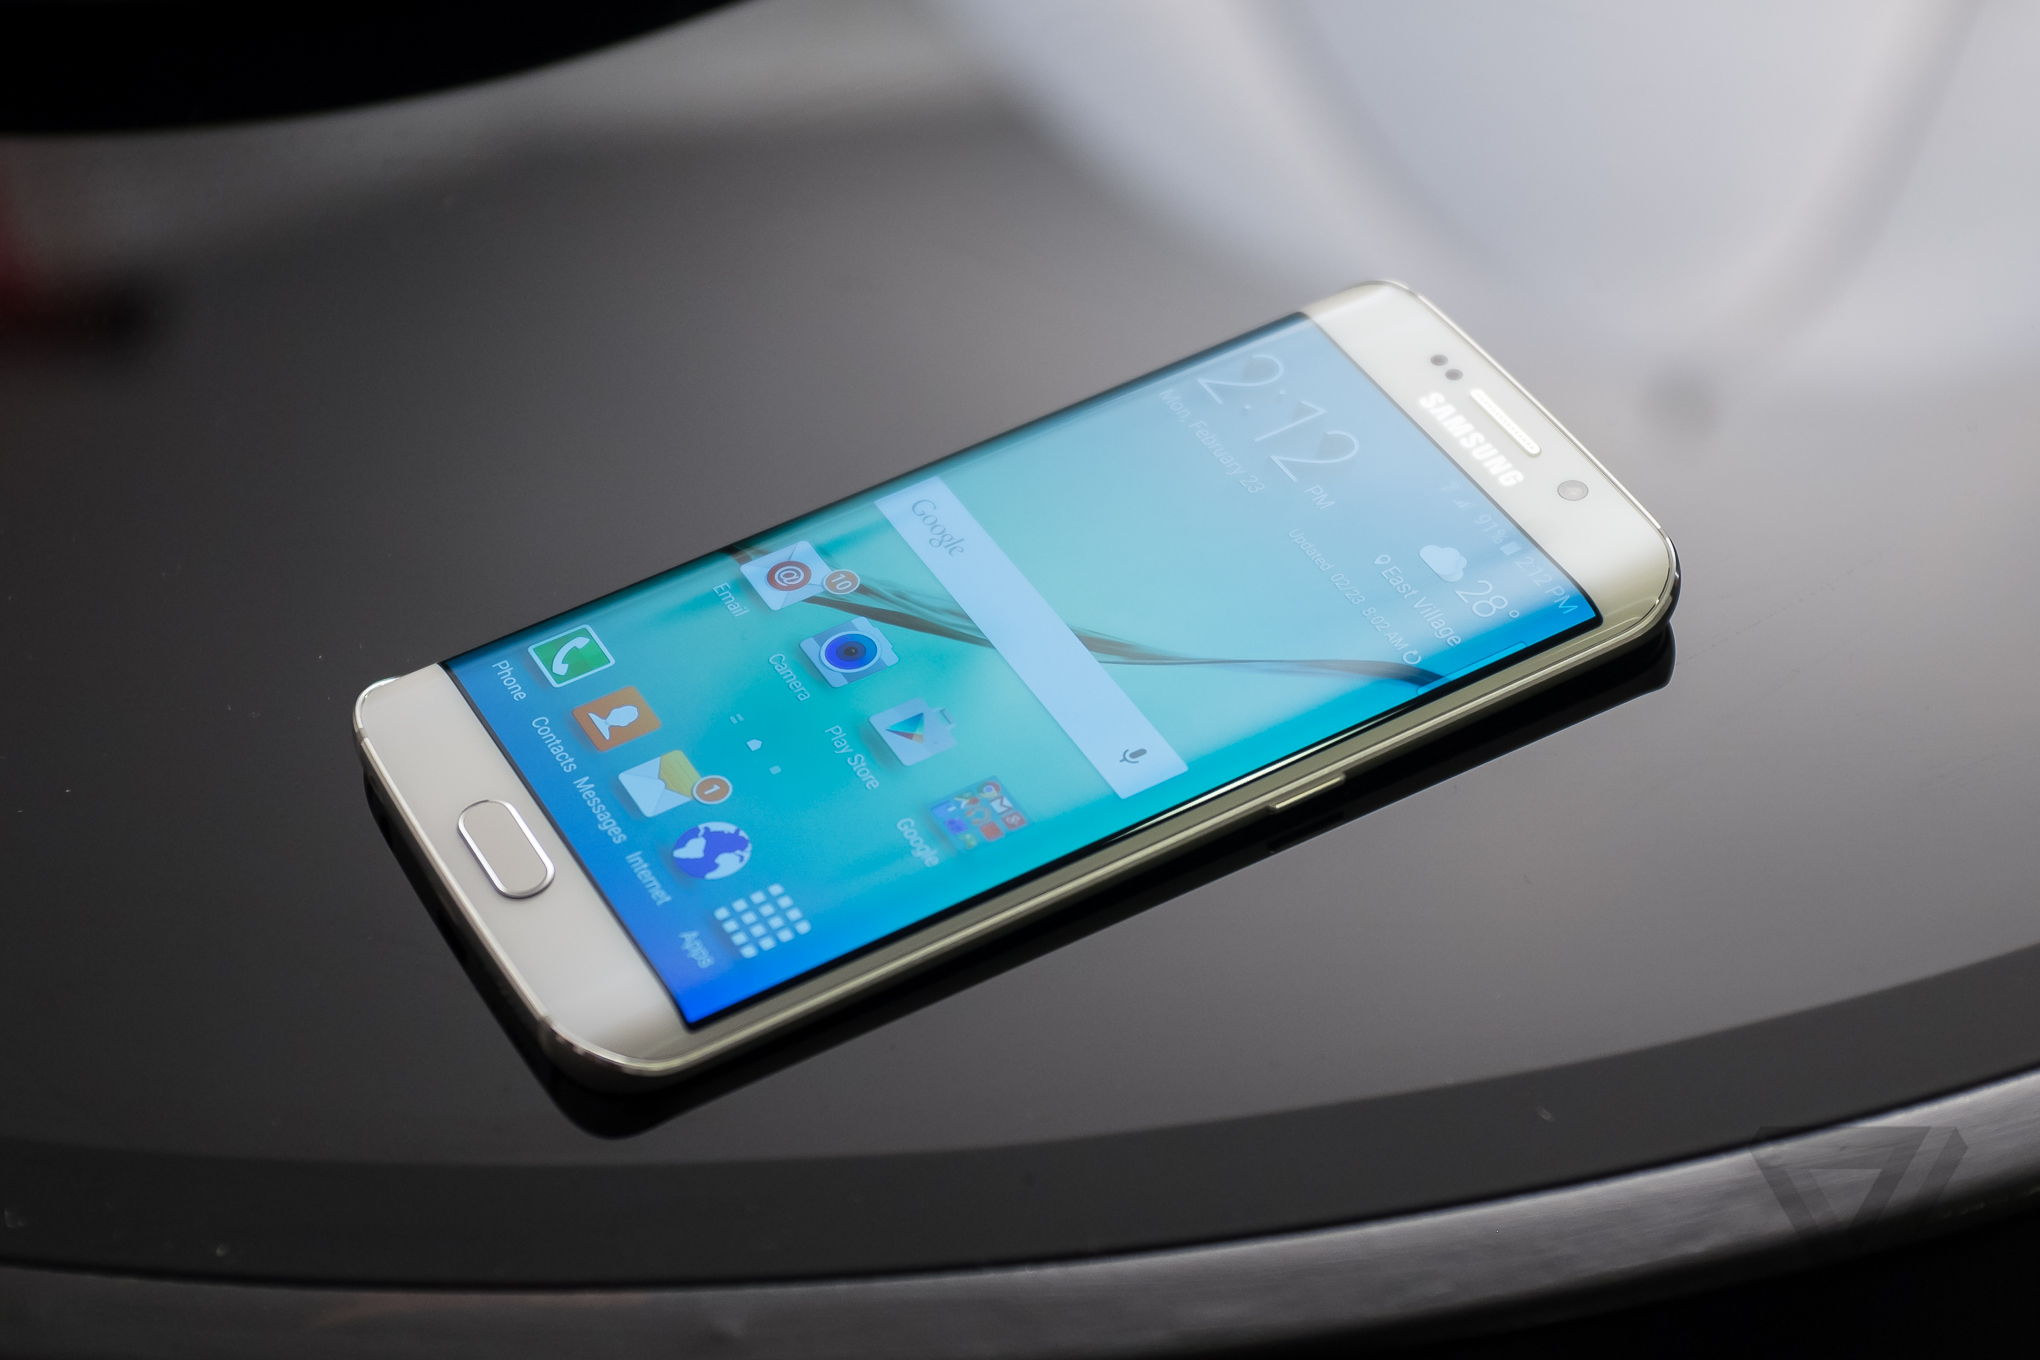 Galaxy s6 экран. Смартфон Samsung Galaxy s6 Edge. Samsung Galaxy s6 Edge 2015. Самсунг с выпуклым экраном s6 Edge. Самсунг галакси с 6 с изогнутым экраном.